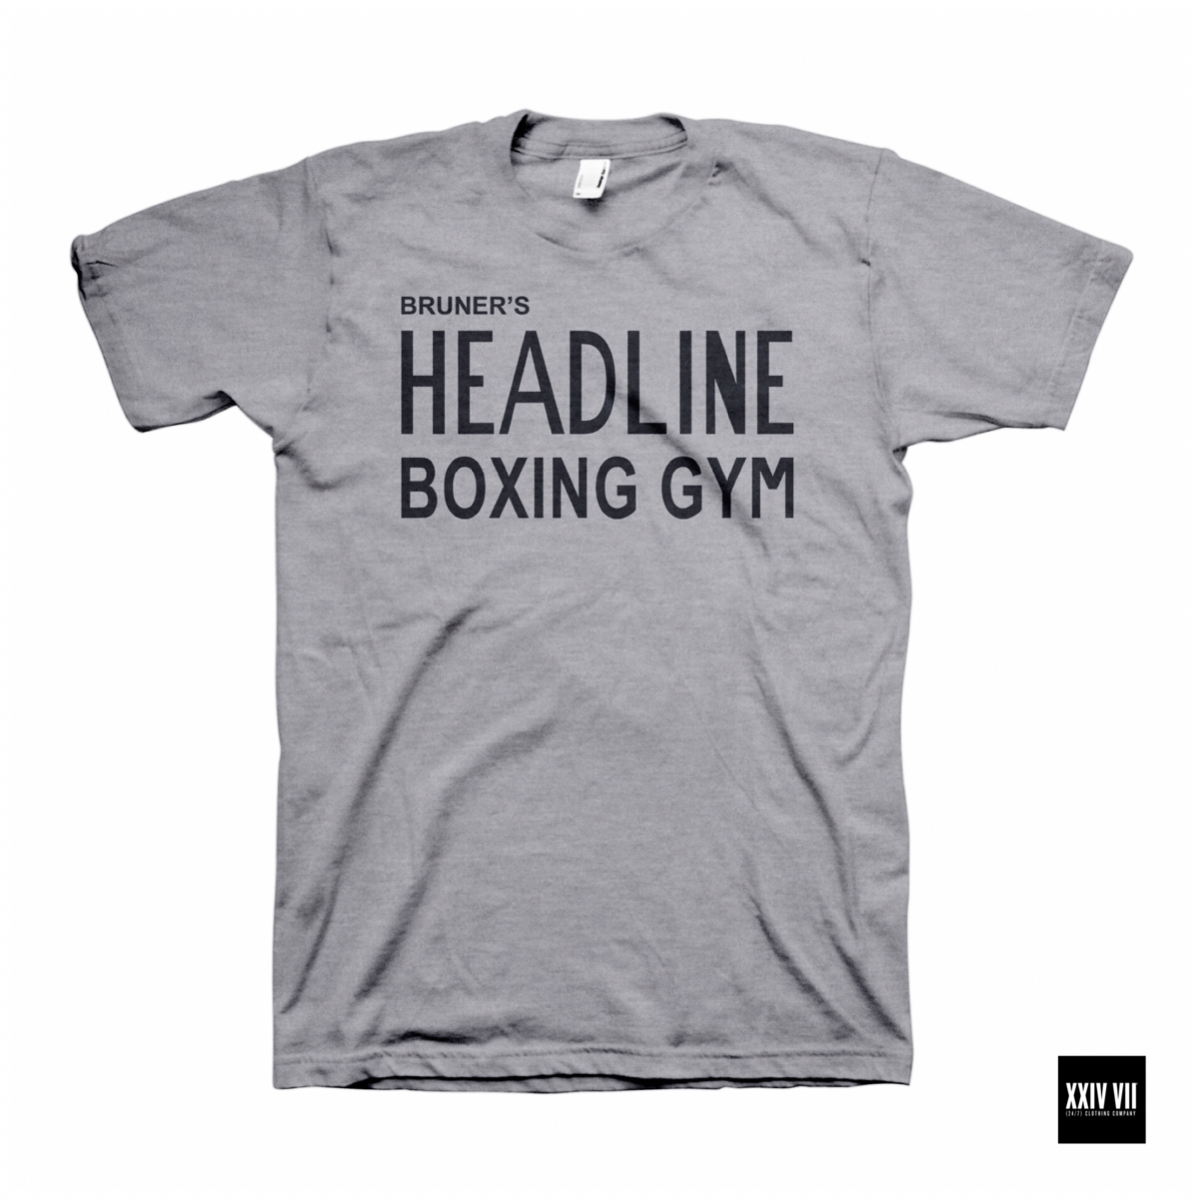 Bruner's Headline Boxing Gym T-shirt